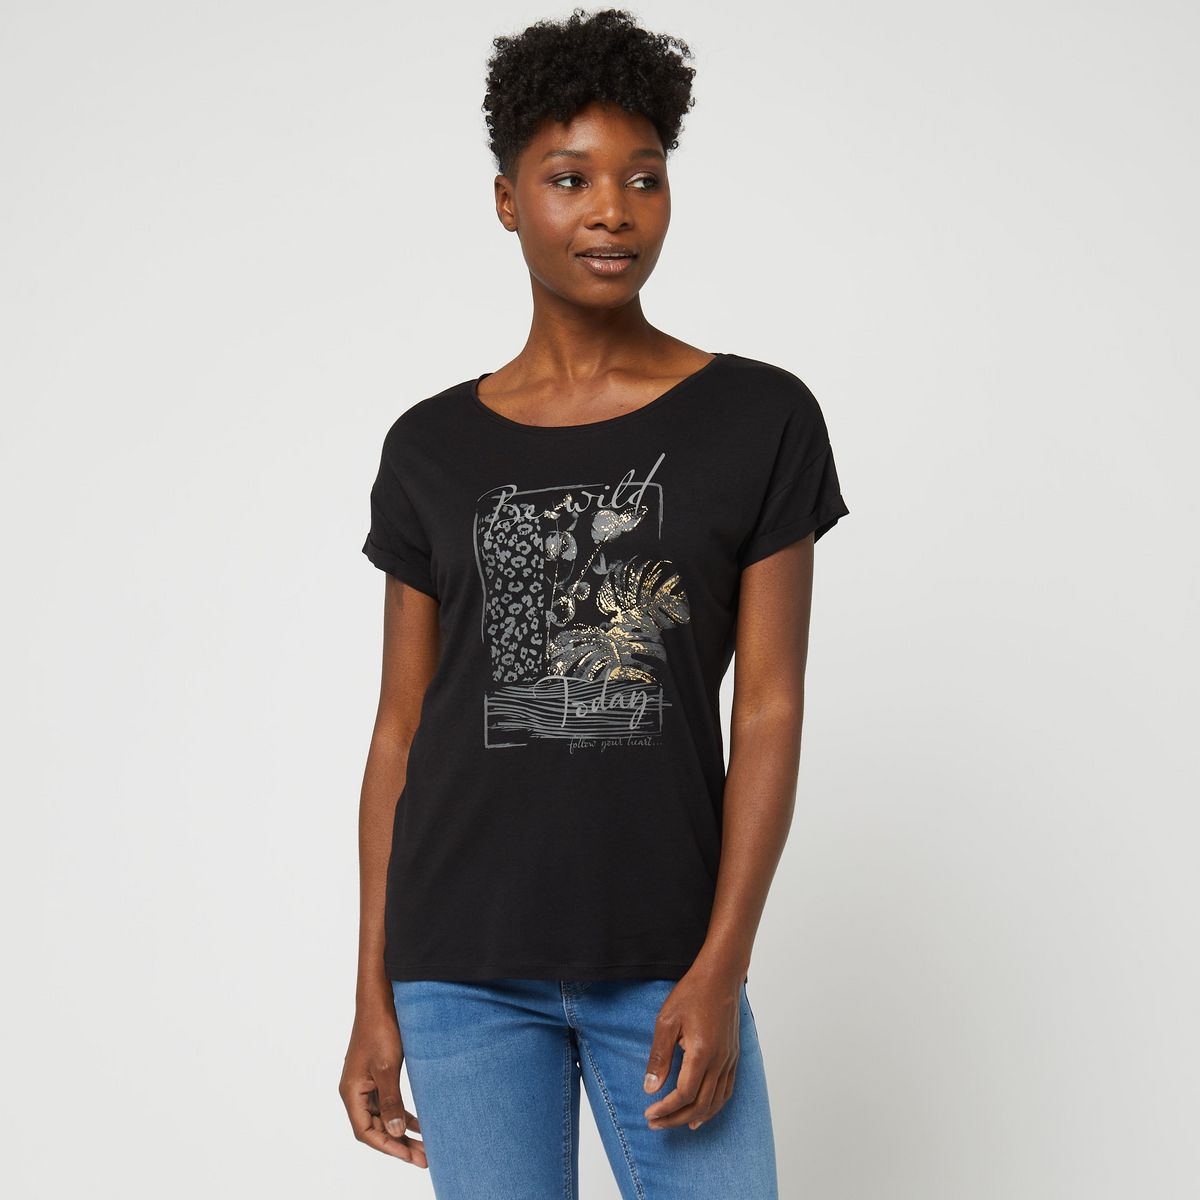 INEXTENSO T-shirt manche courte noir fantaisie femme